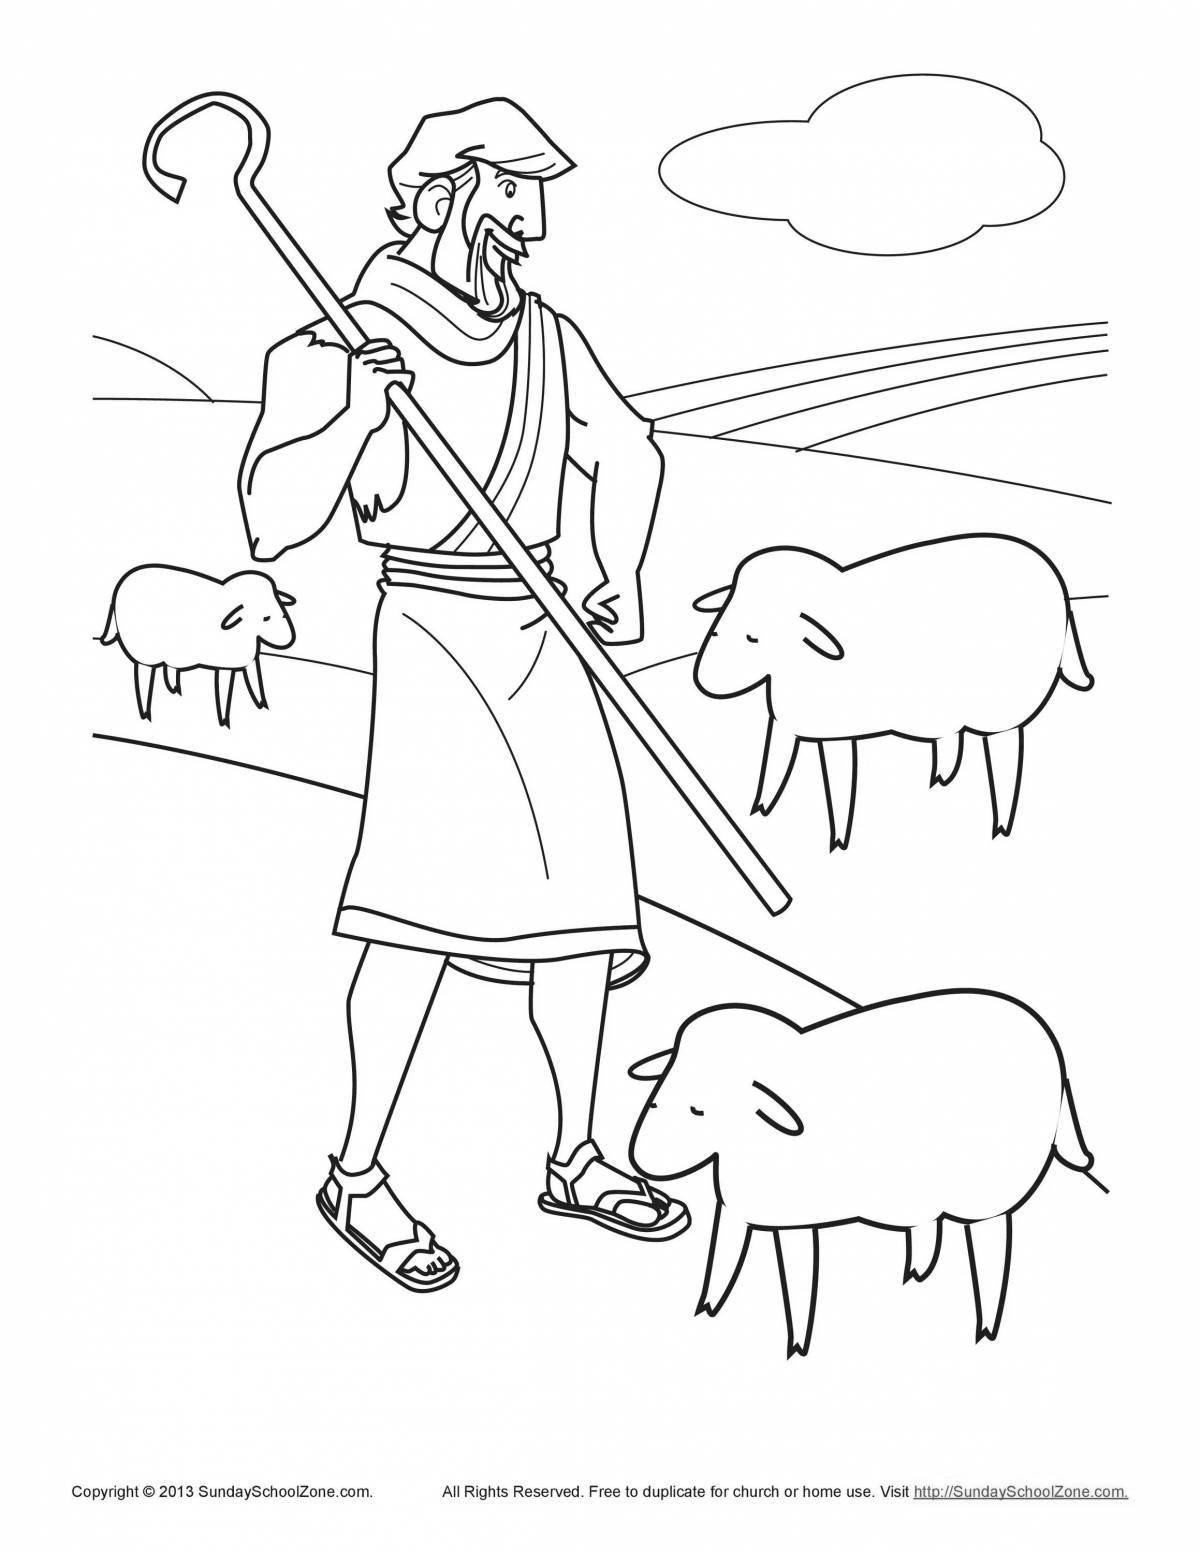 Delightful shepherd lel coloring book